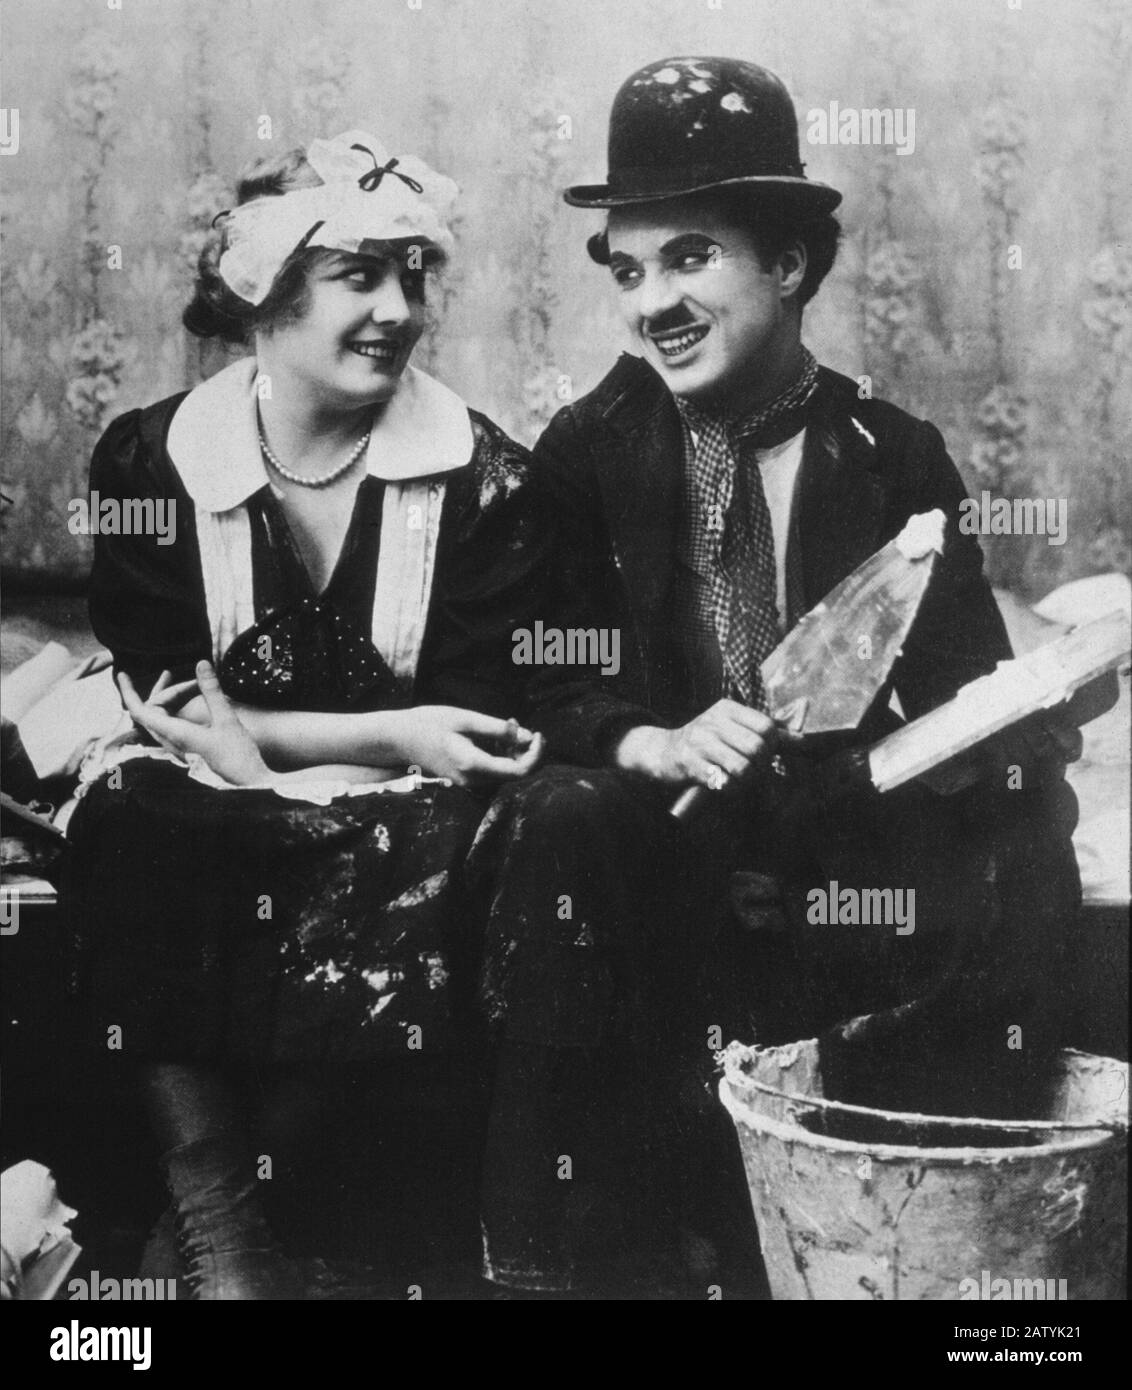 CHARLES  CHAPLIN  ( 1889 - 1977 ) and Edna Purviance ( 1894 - 1958 ) in WORK ( 1915 - Charlot apprendista ) - muratore - bombetta - bowler hat - derby Stock Photo